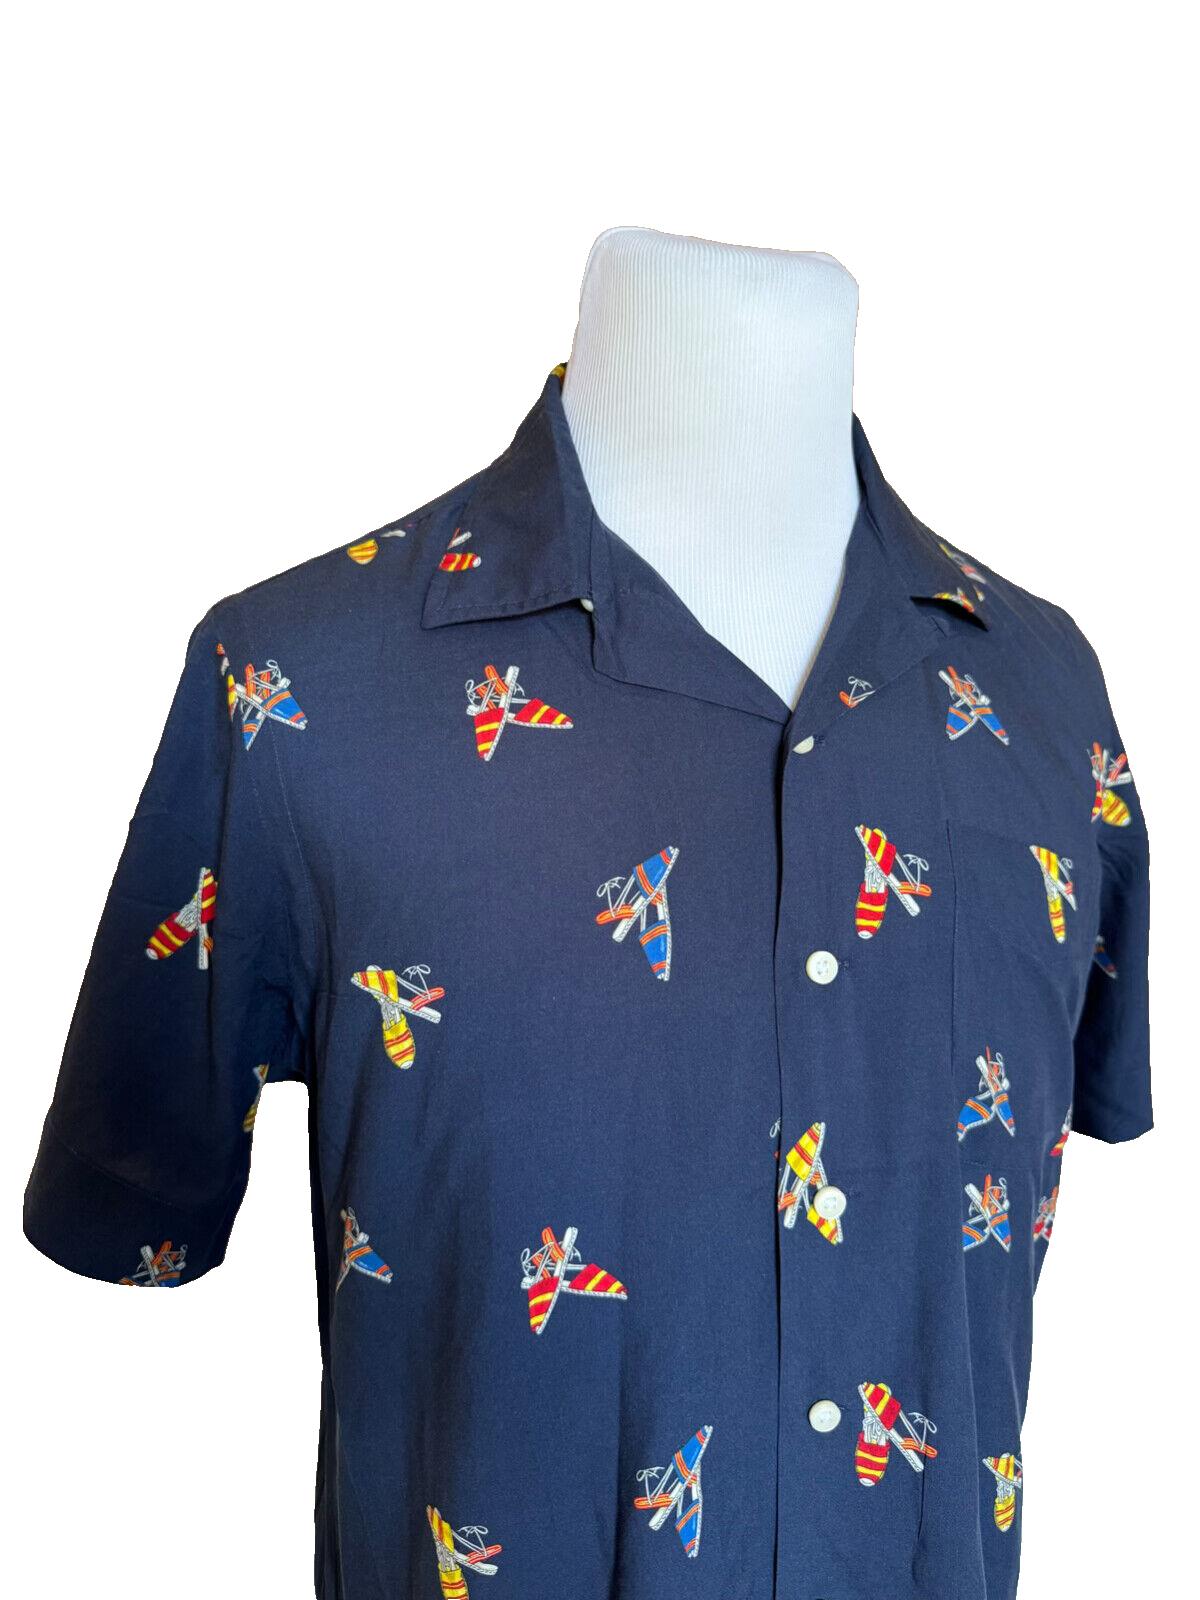 NWT $228 Polo Ralph Lauren Short Sleeve Sandals Printed Button Shirt Blue Medium